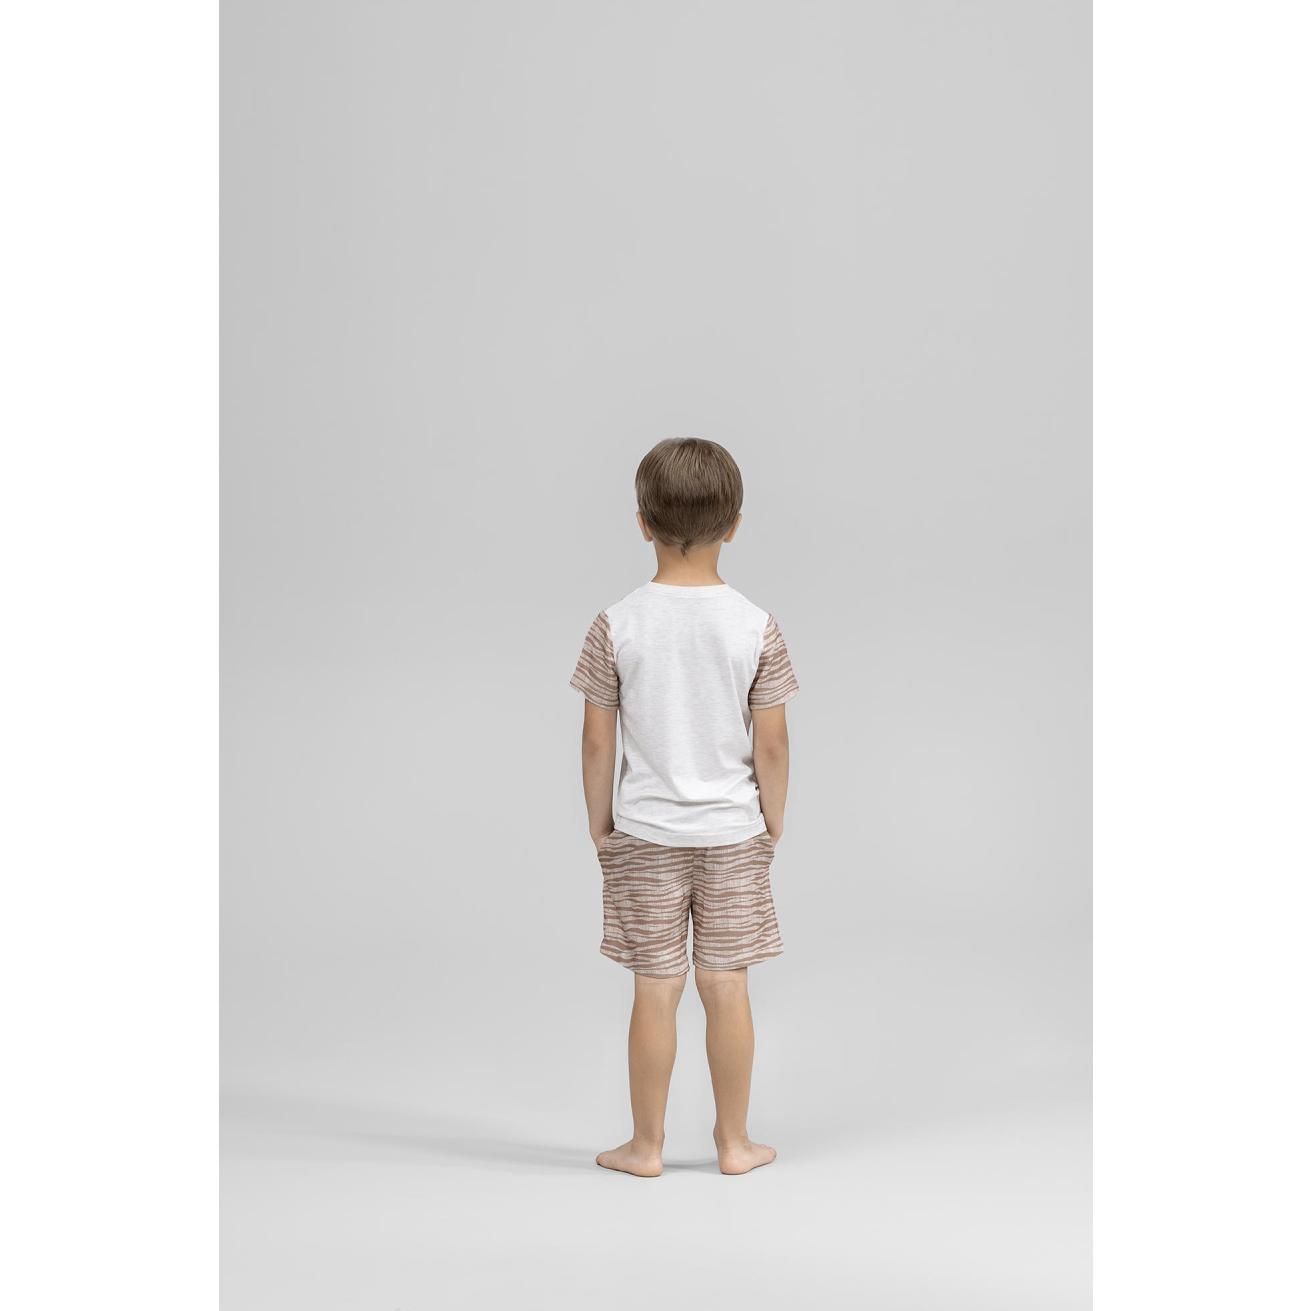 Пижама для мальчиков Kids by togas Сафари бежевый 116-122 см, размер 116-122 см - фото 5